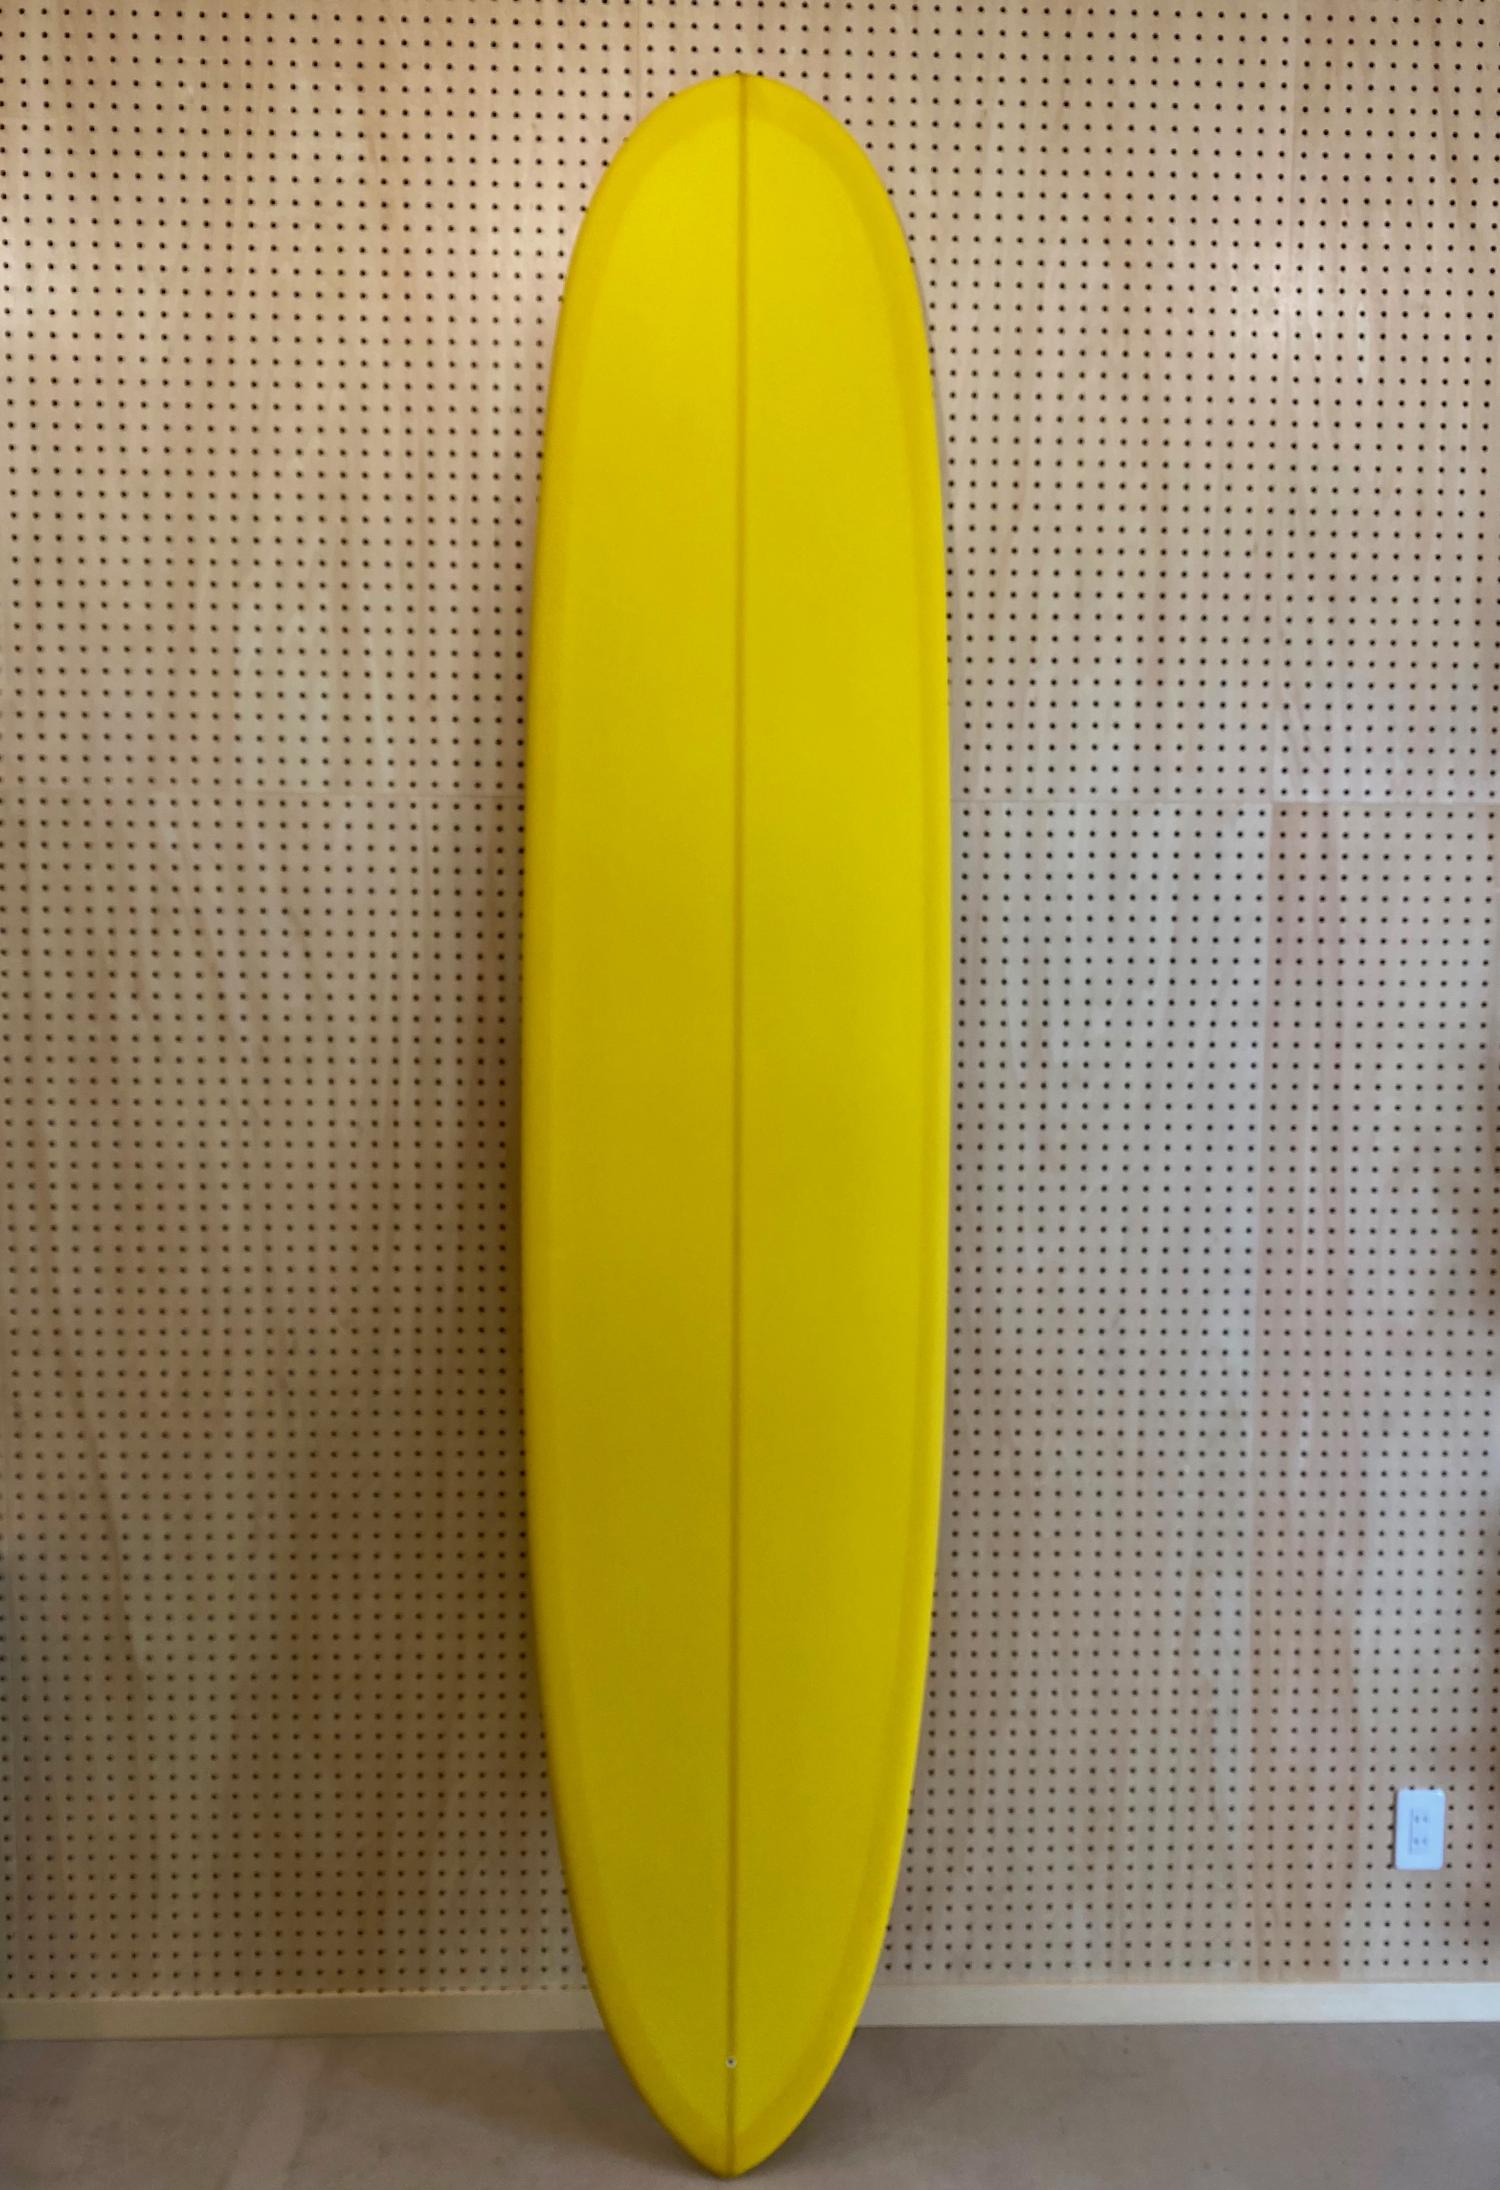 RMD SURFBOARD 9.2 Classic Noserider